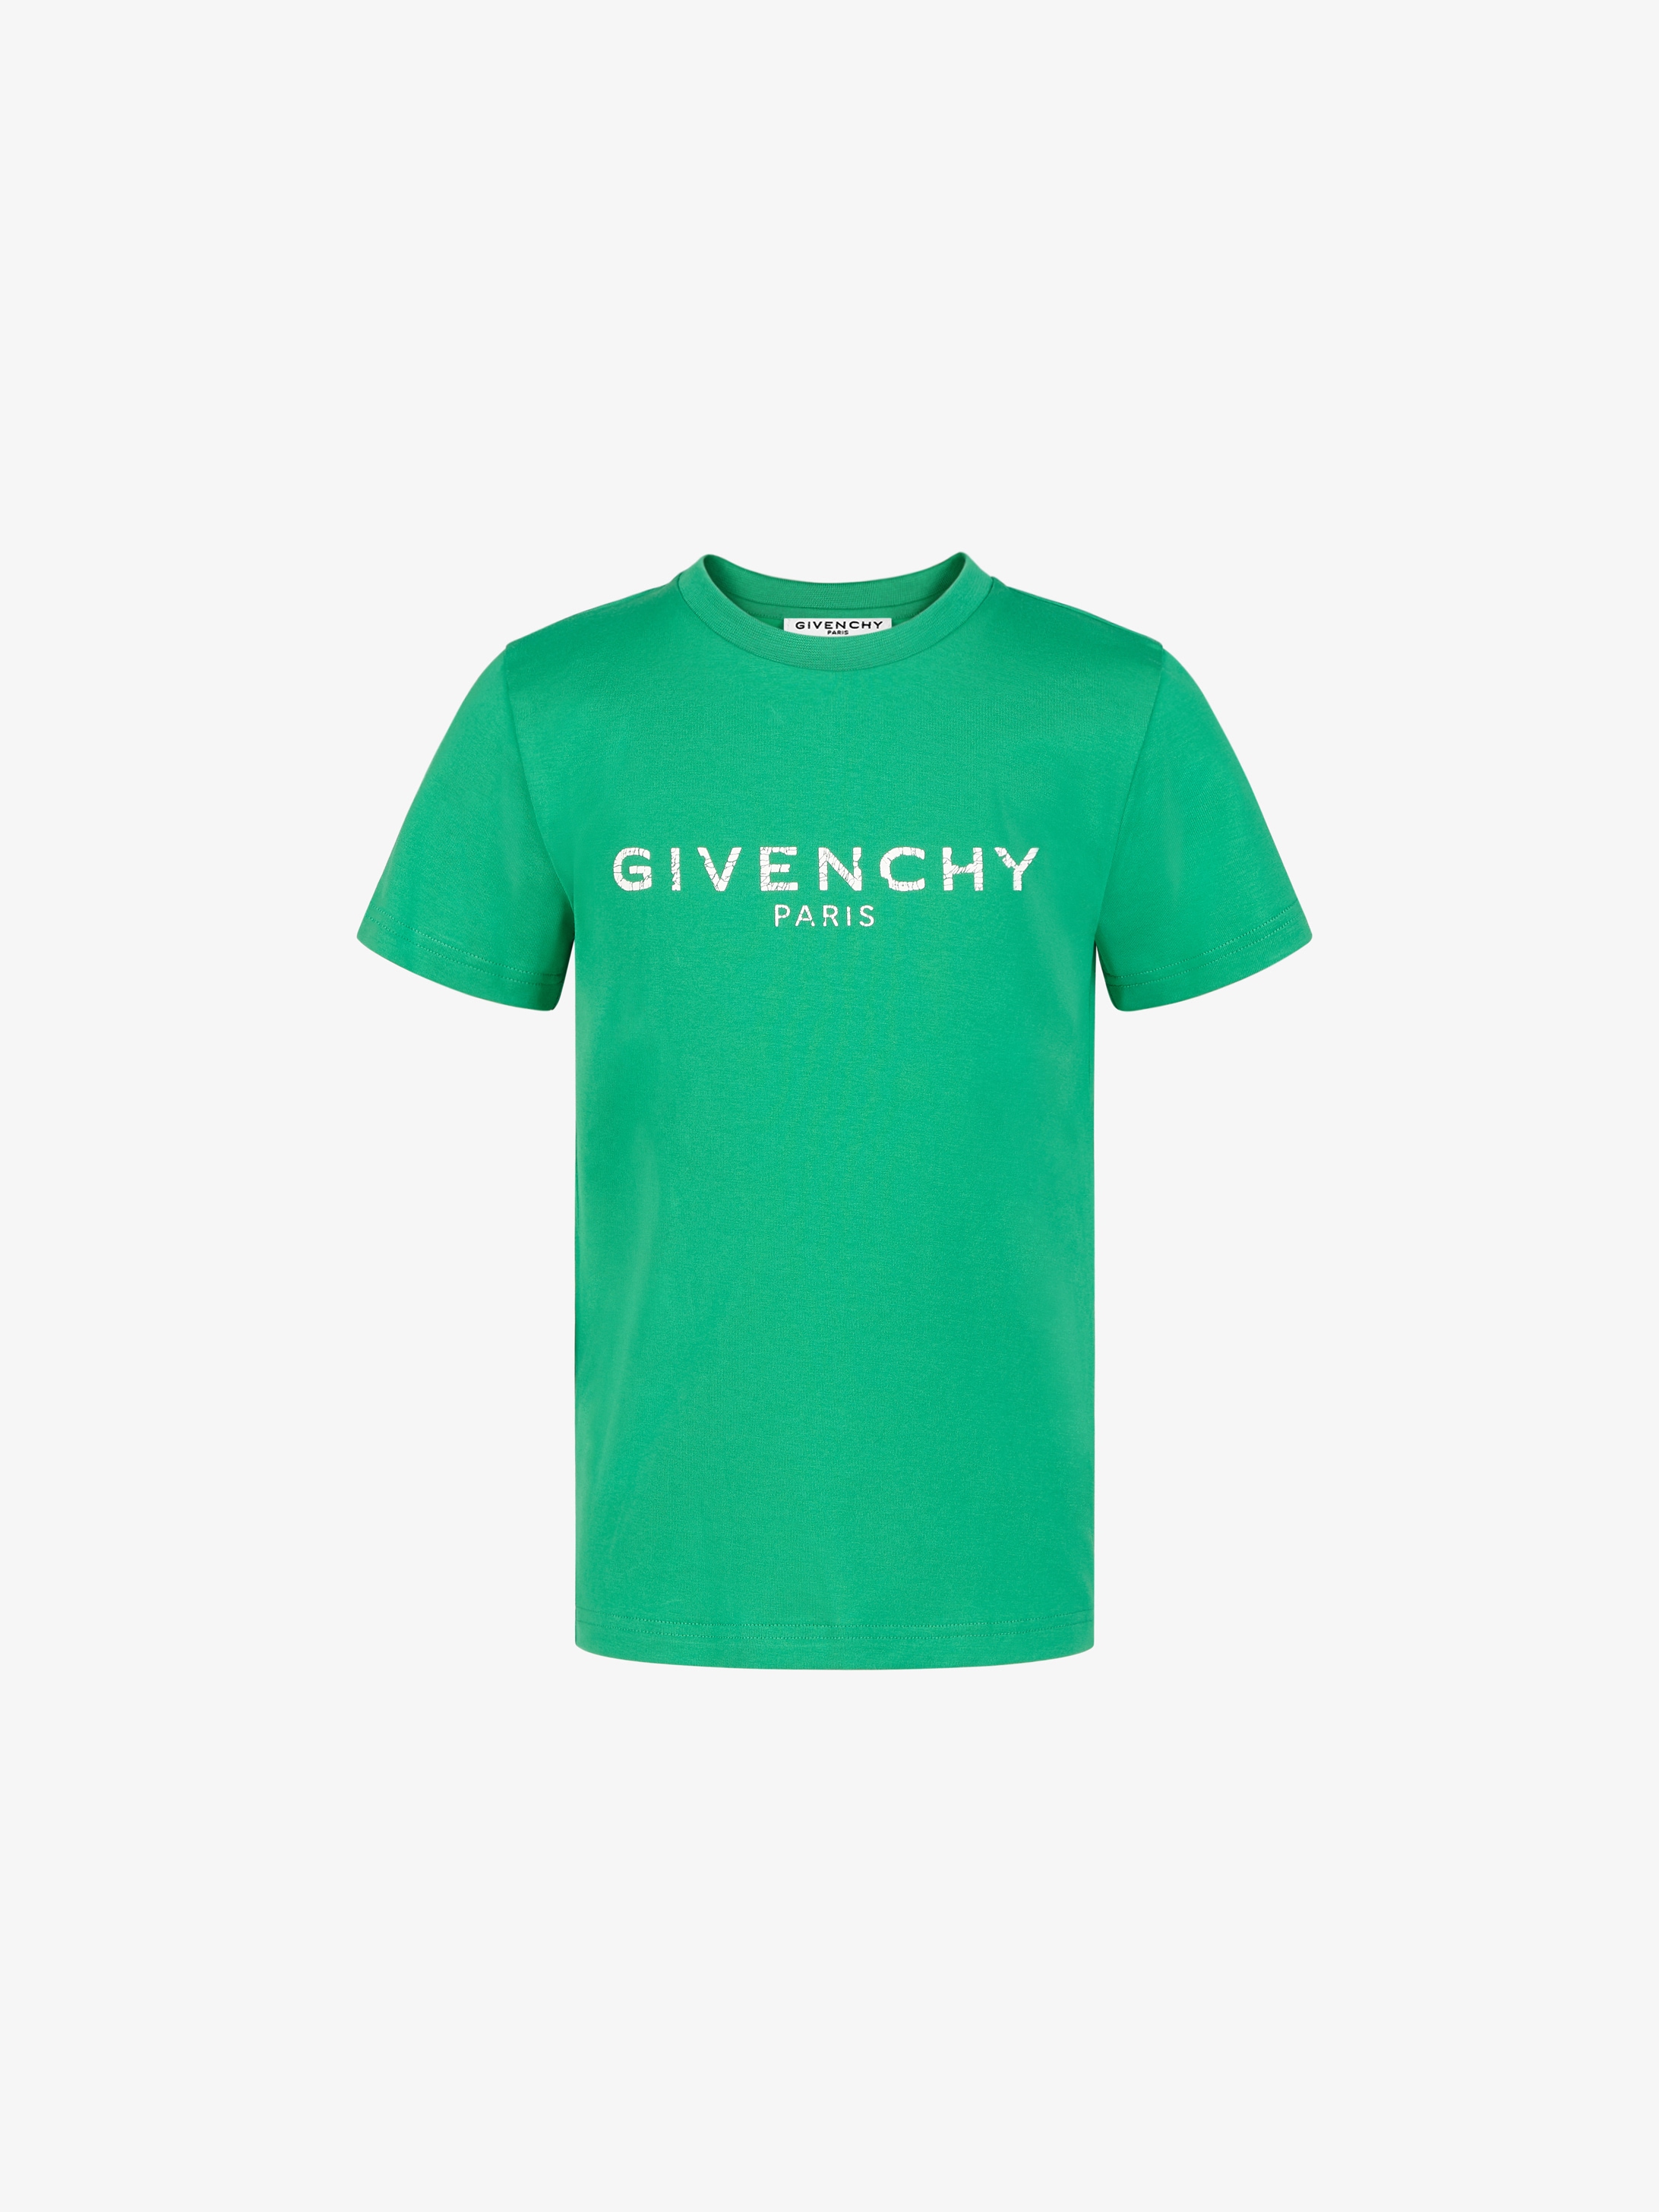 givench t shirt